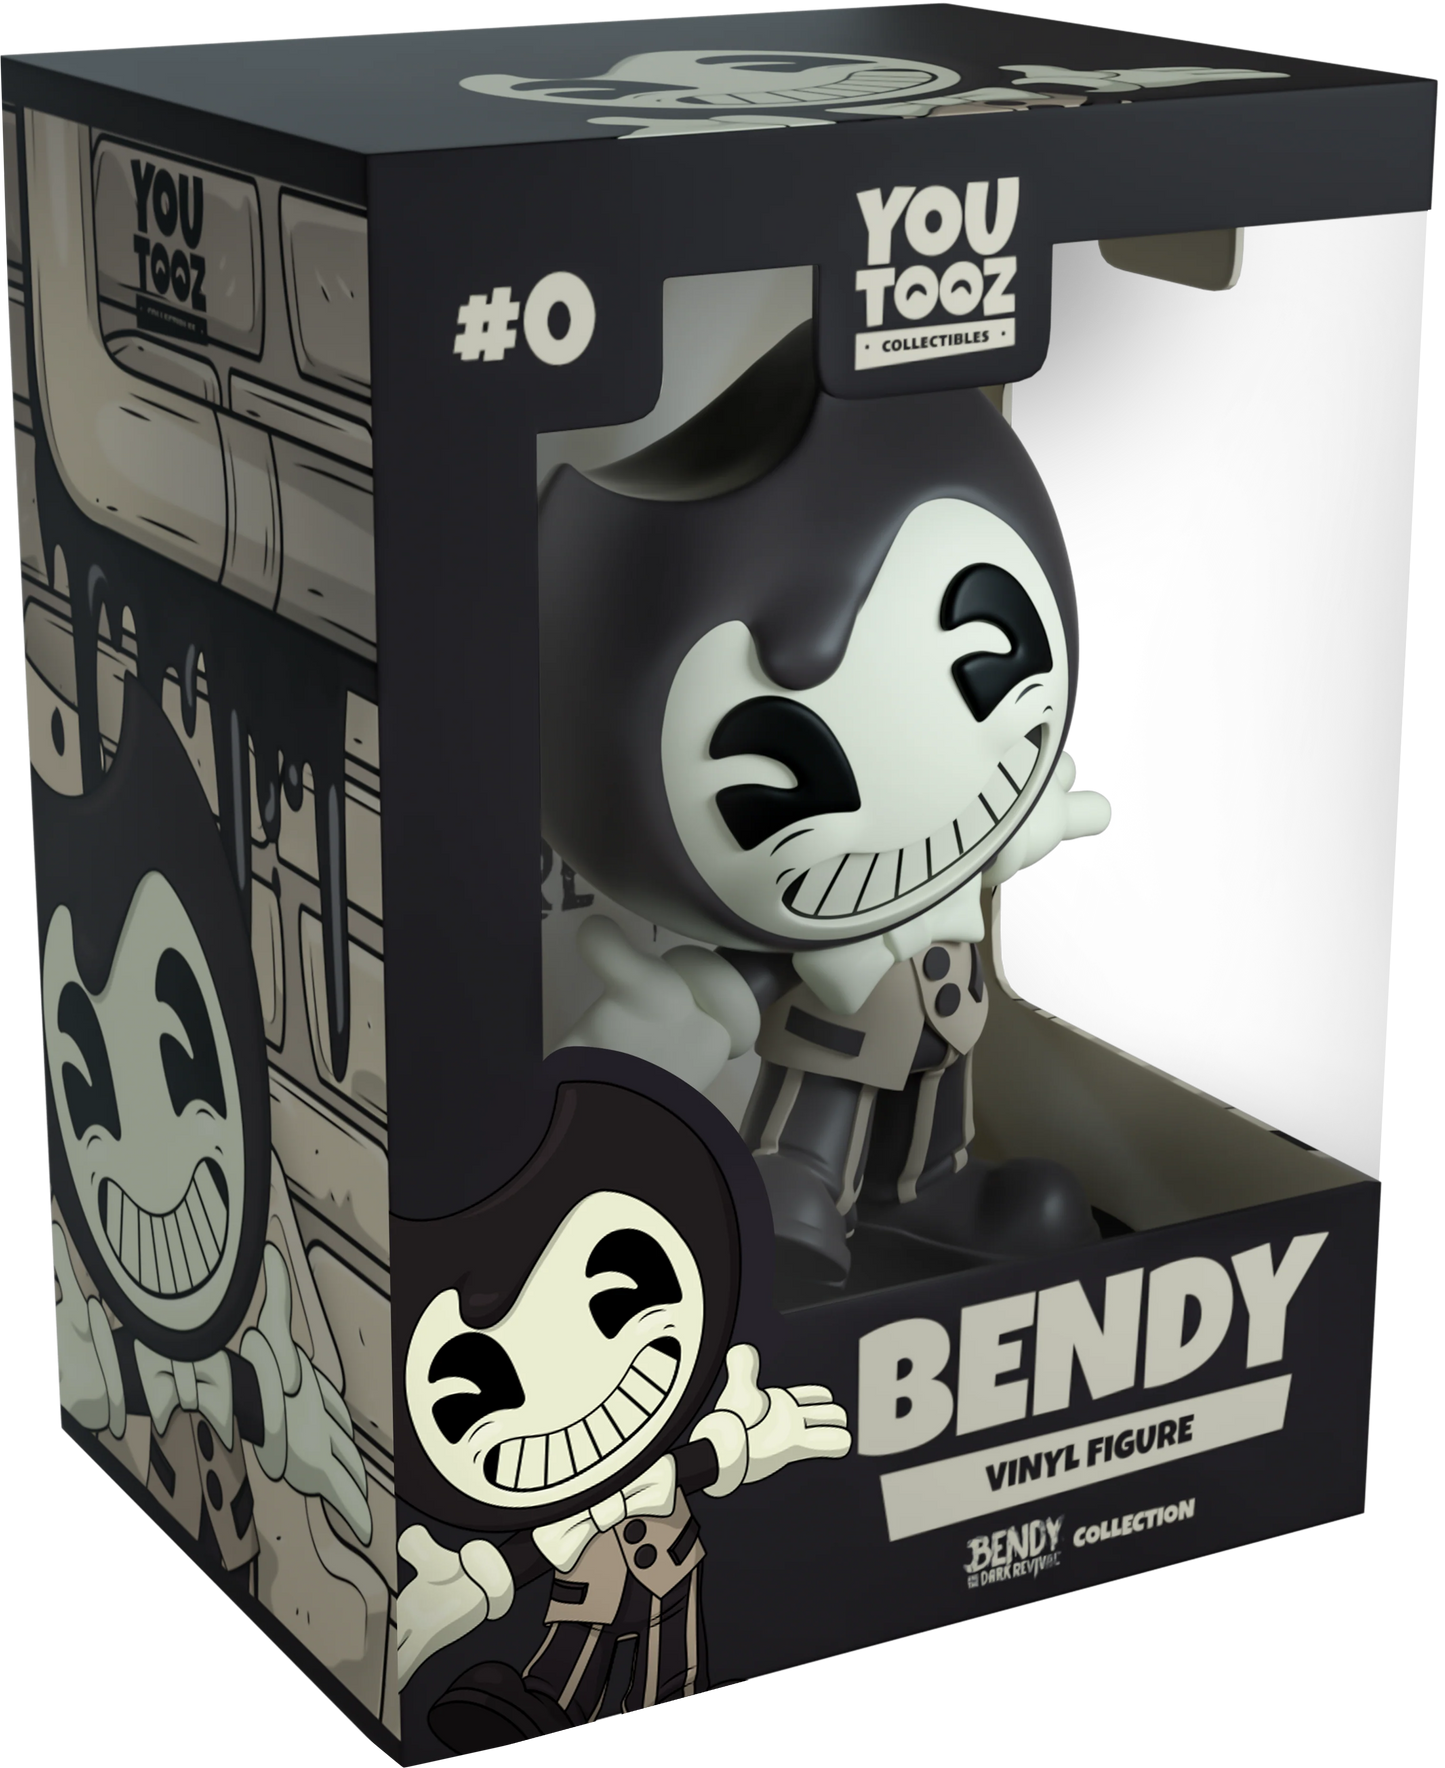 Bendy Figurine Bendy and the Dark Revival Vinyl figurine Youtooz